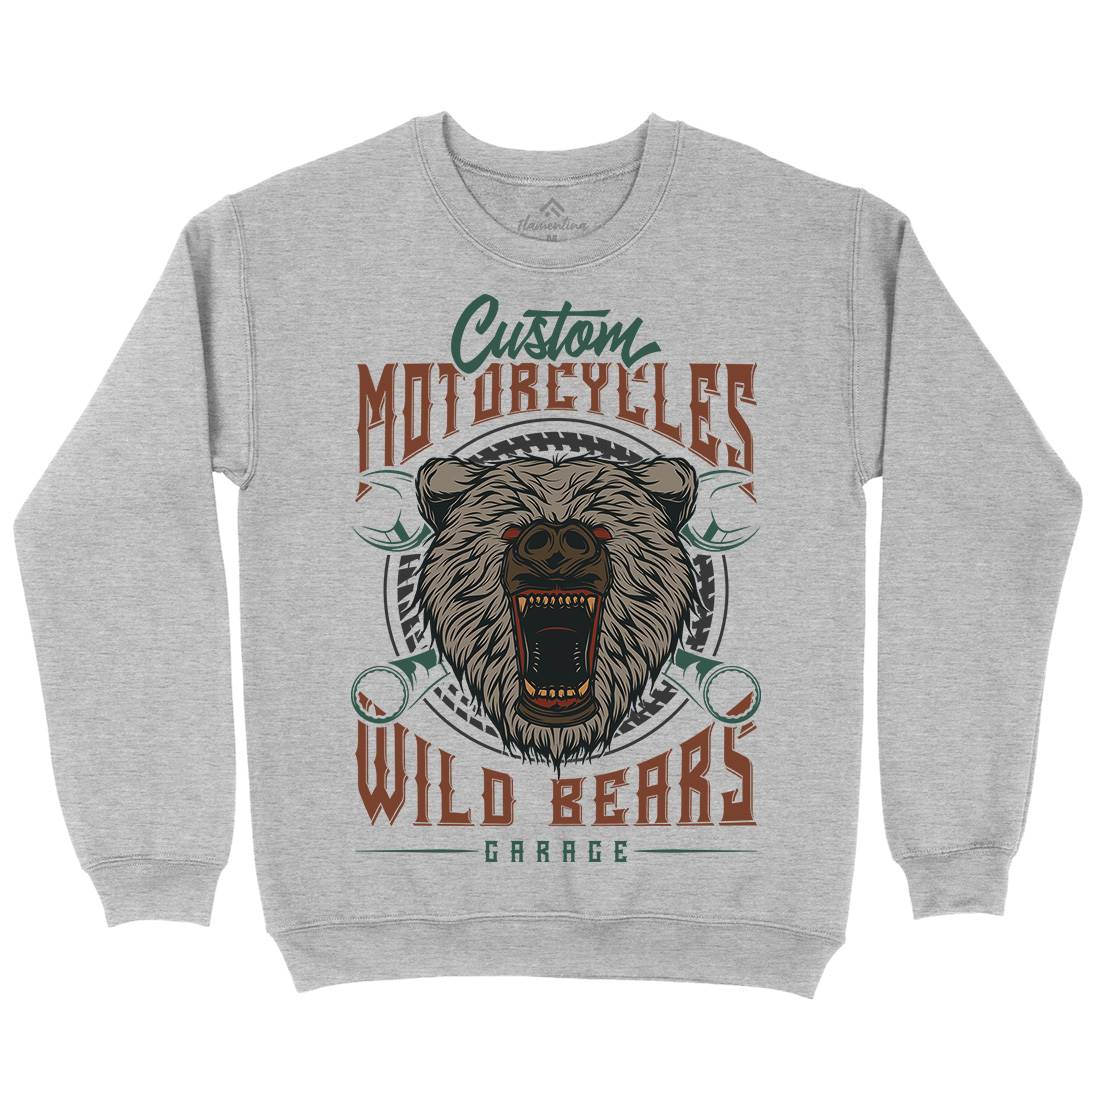 Wild Bears Mens Crew Neck Sweatshirt Motorcycles B788